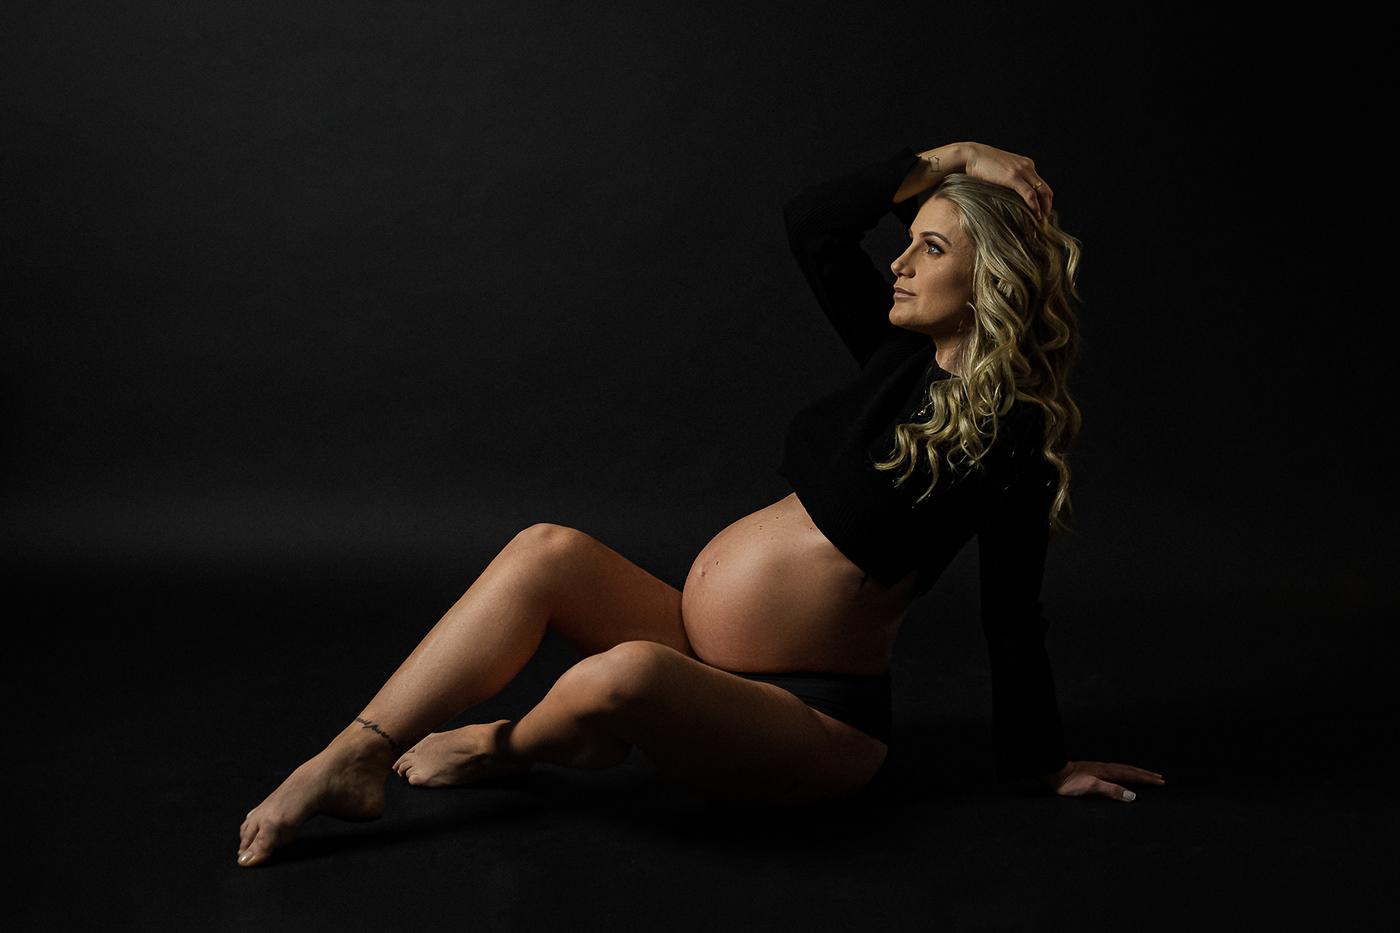 Ensaio gestante  gestante grávida maternidade maternity photoshoot pregnancy pregnancy photography pregnant Studio Photography